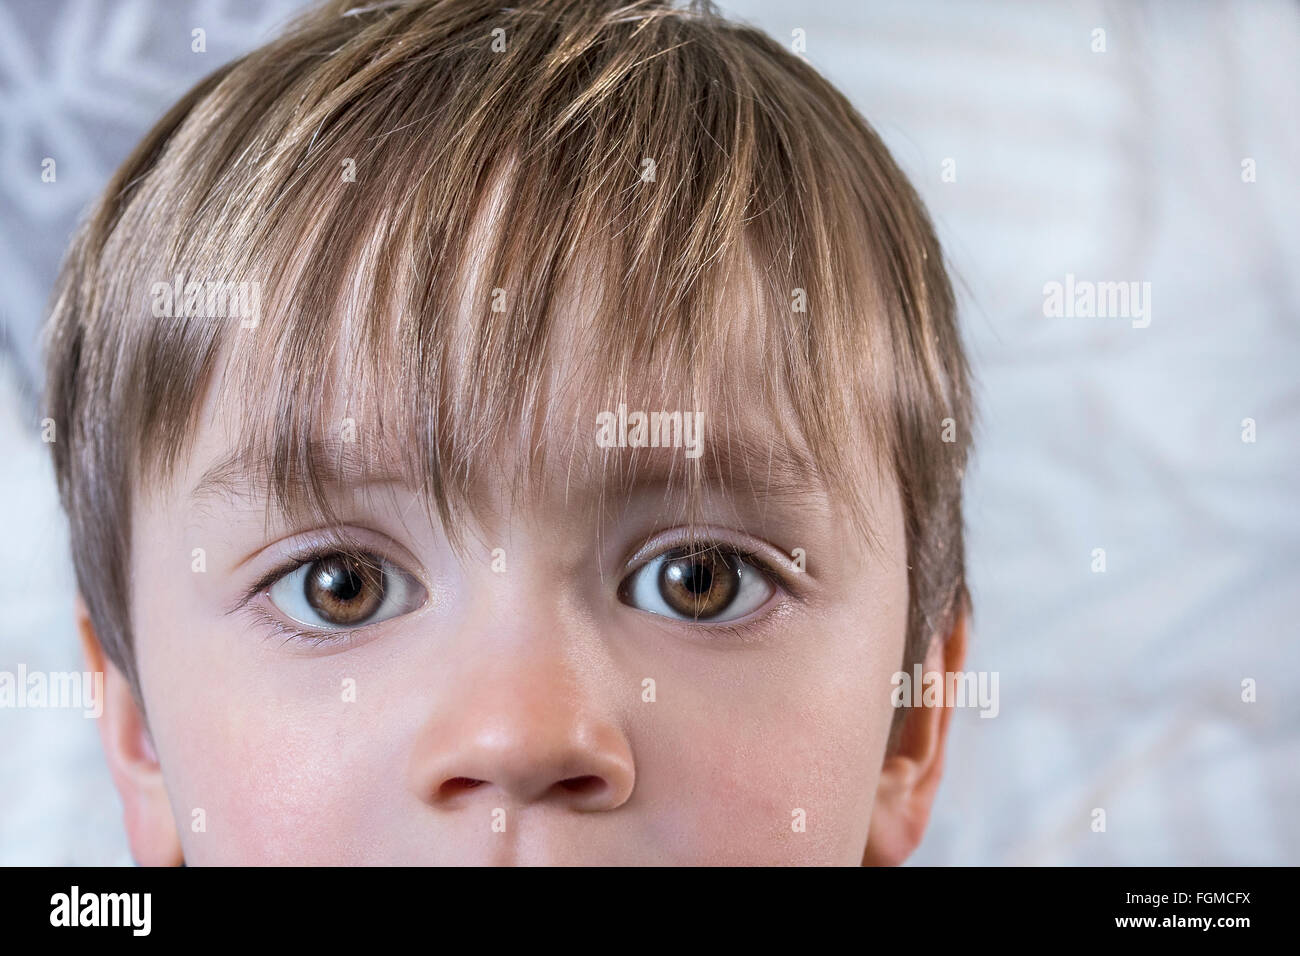 Close up of a cute kid avec de grands yeux Banque D'Images